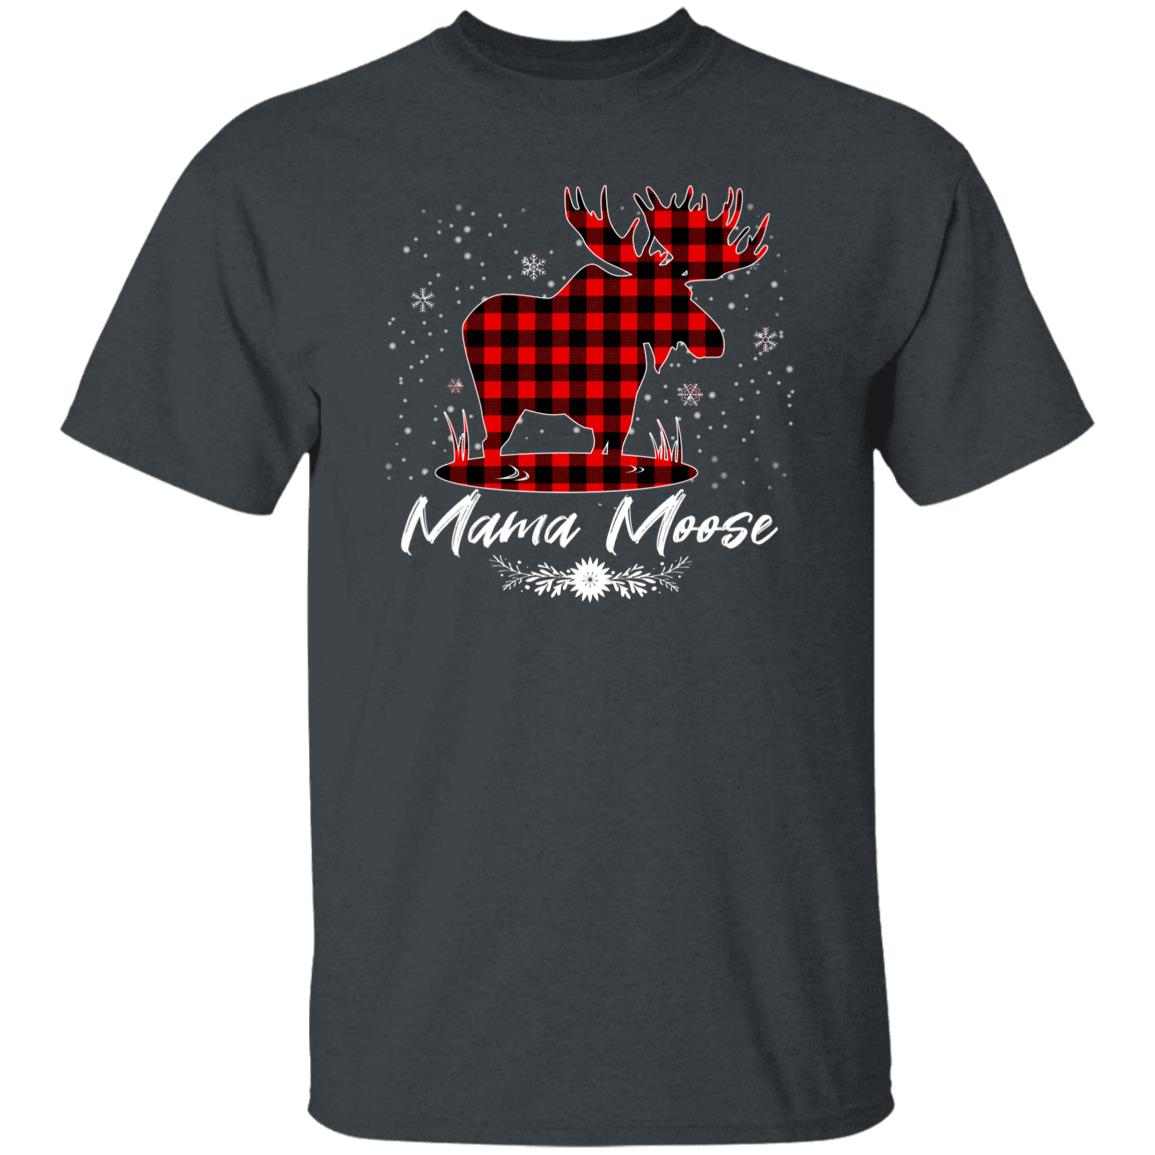 Mama Moose Christmas Unisex shirt mother Holiday tee Black Dark Heather-Family-Gift-Planet